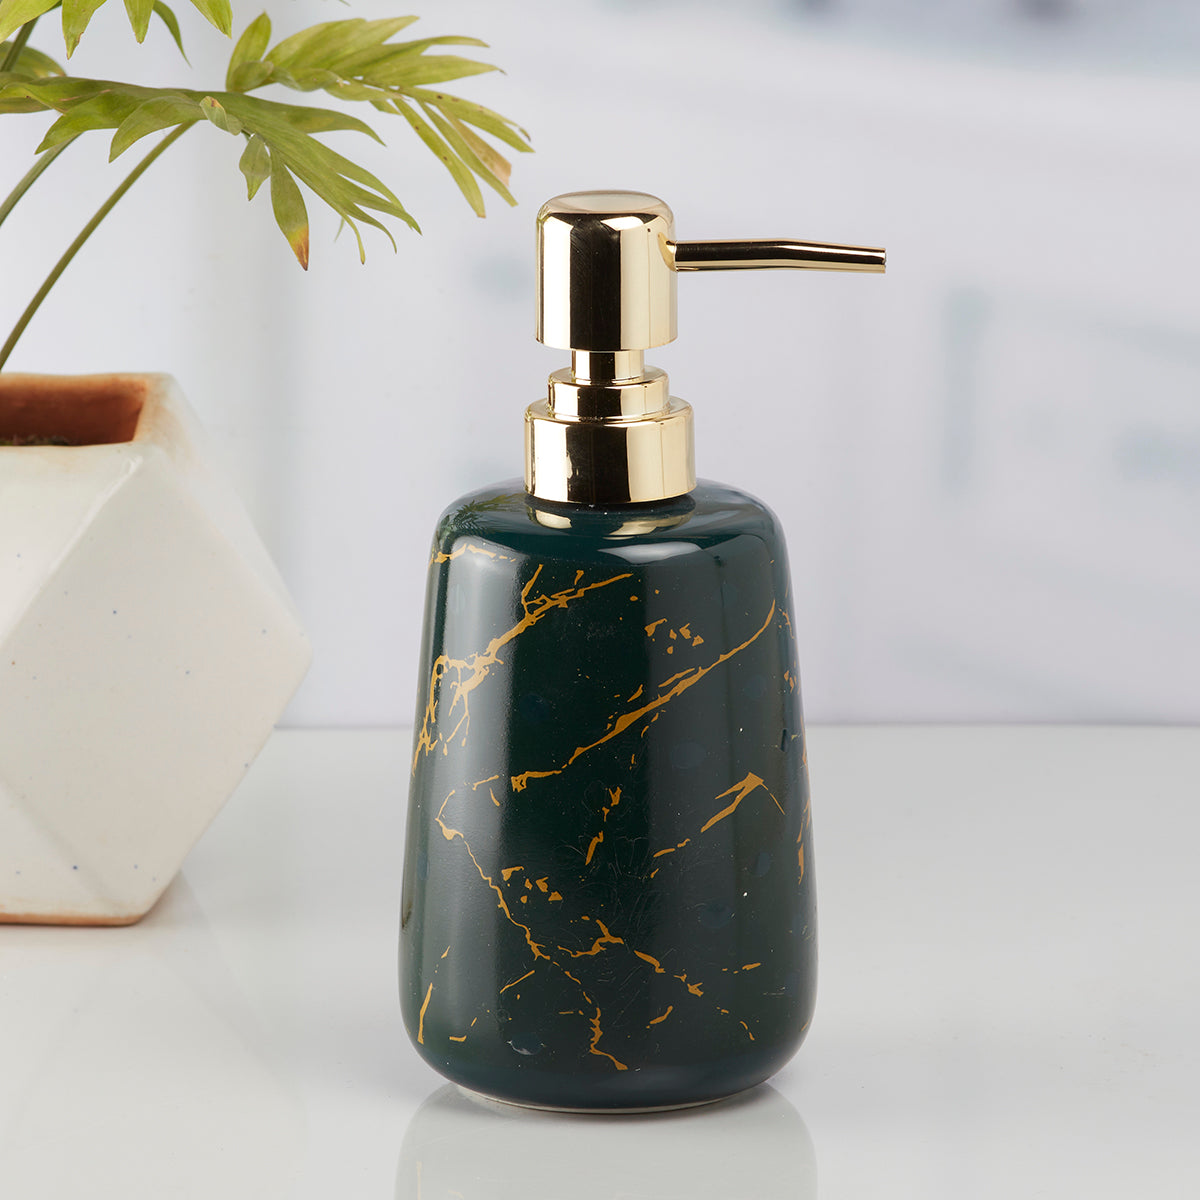 Ceramic Soap Dispenser handwash Pump for Bathroom, Set of 1, Black/Gold (10202)